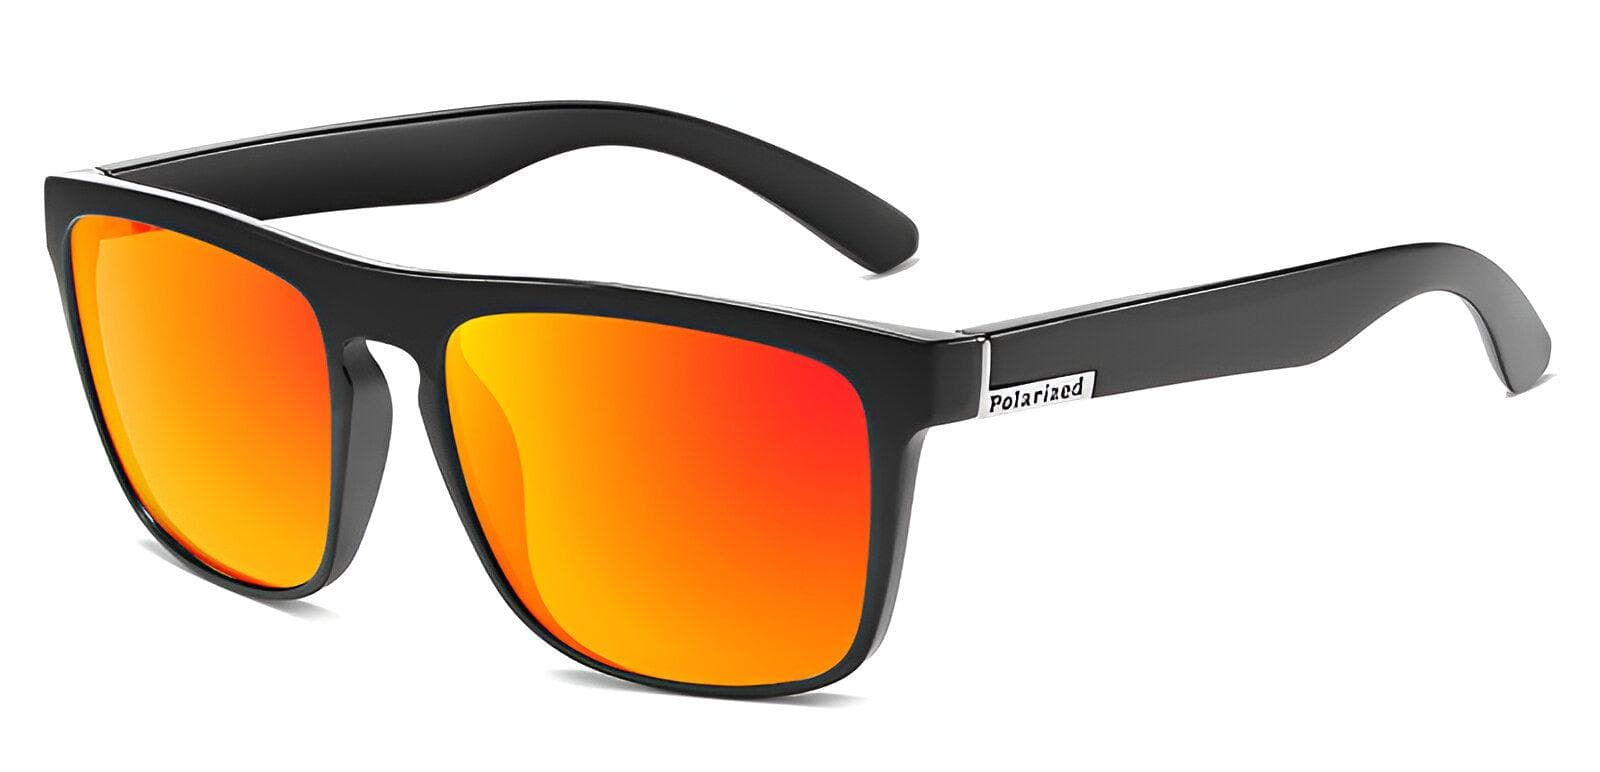 Specsnex polarized UV protected sunglasses unisex (black) – HalfPe